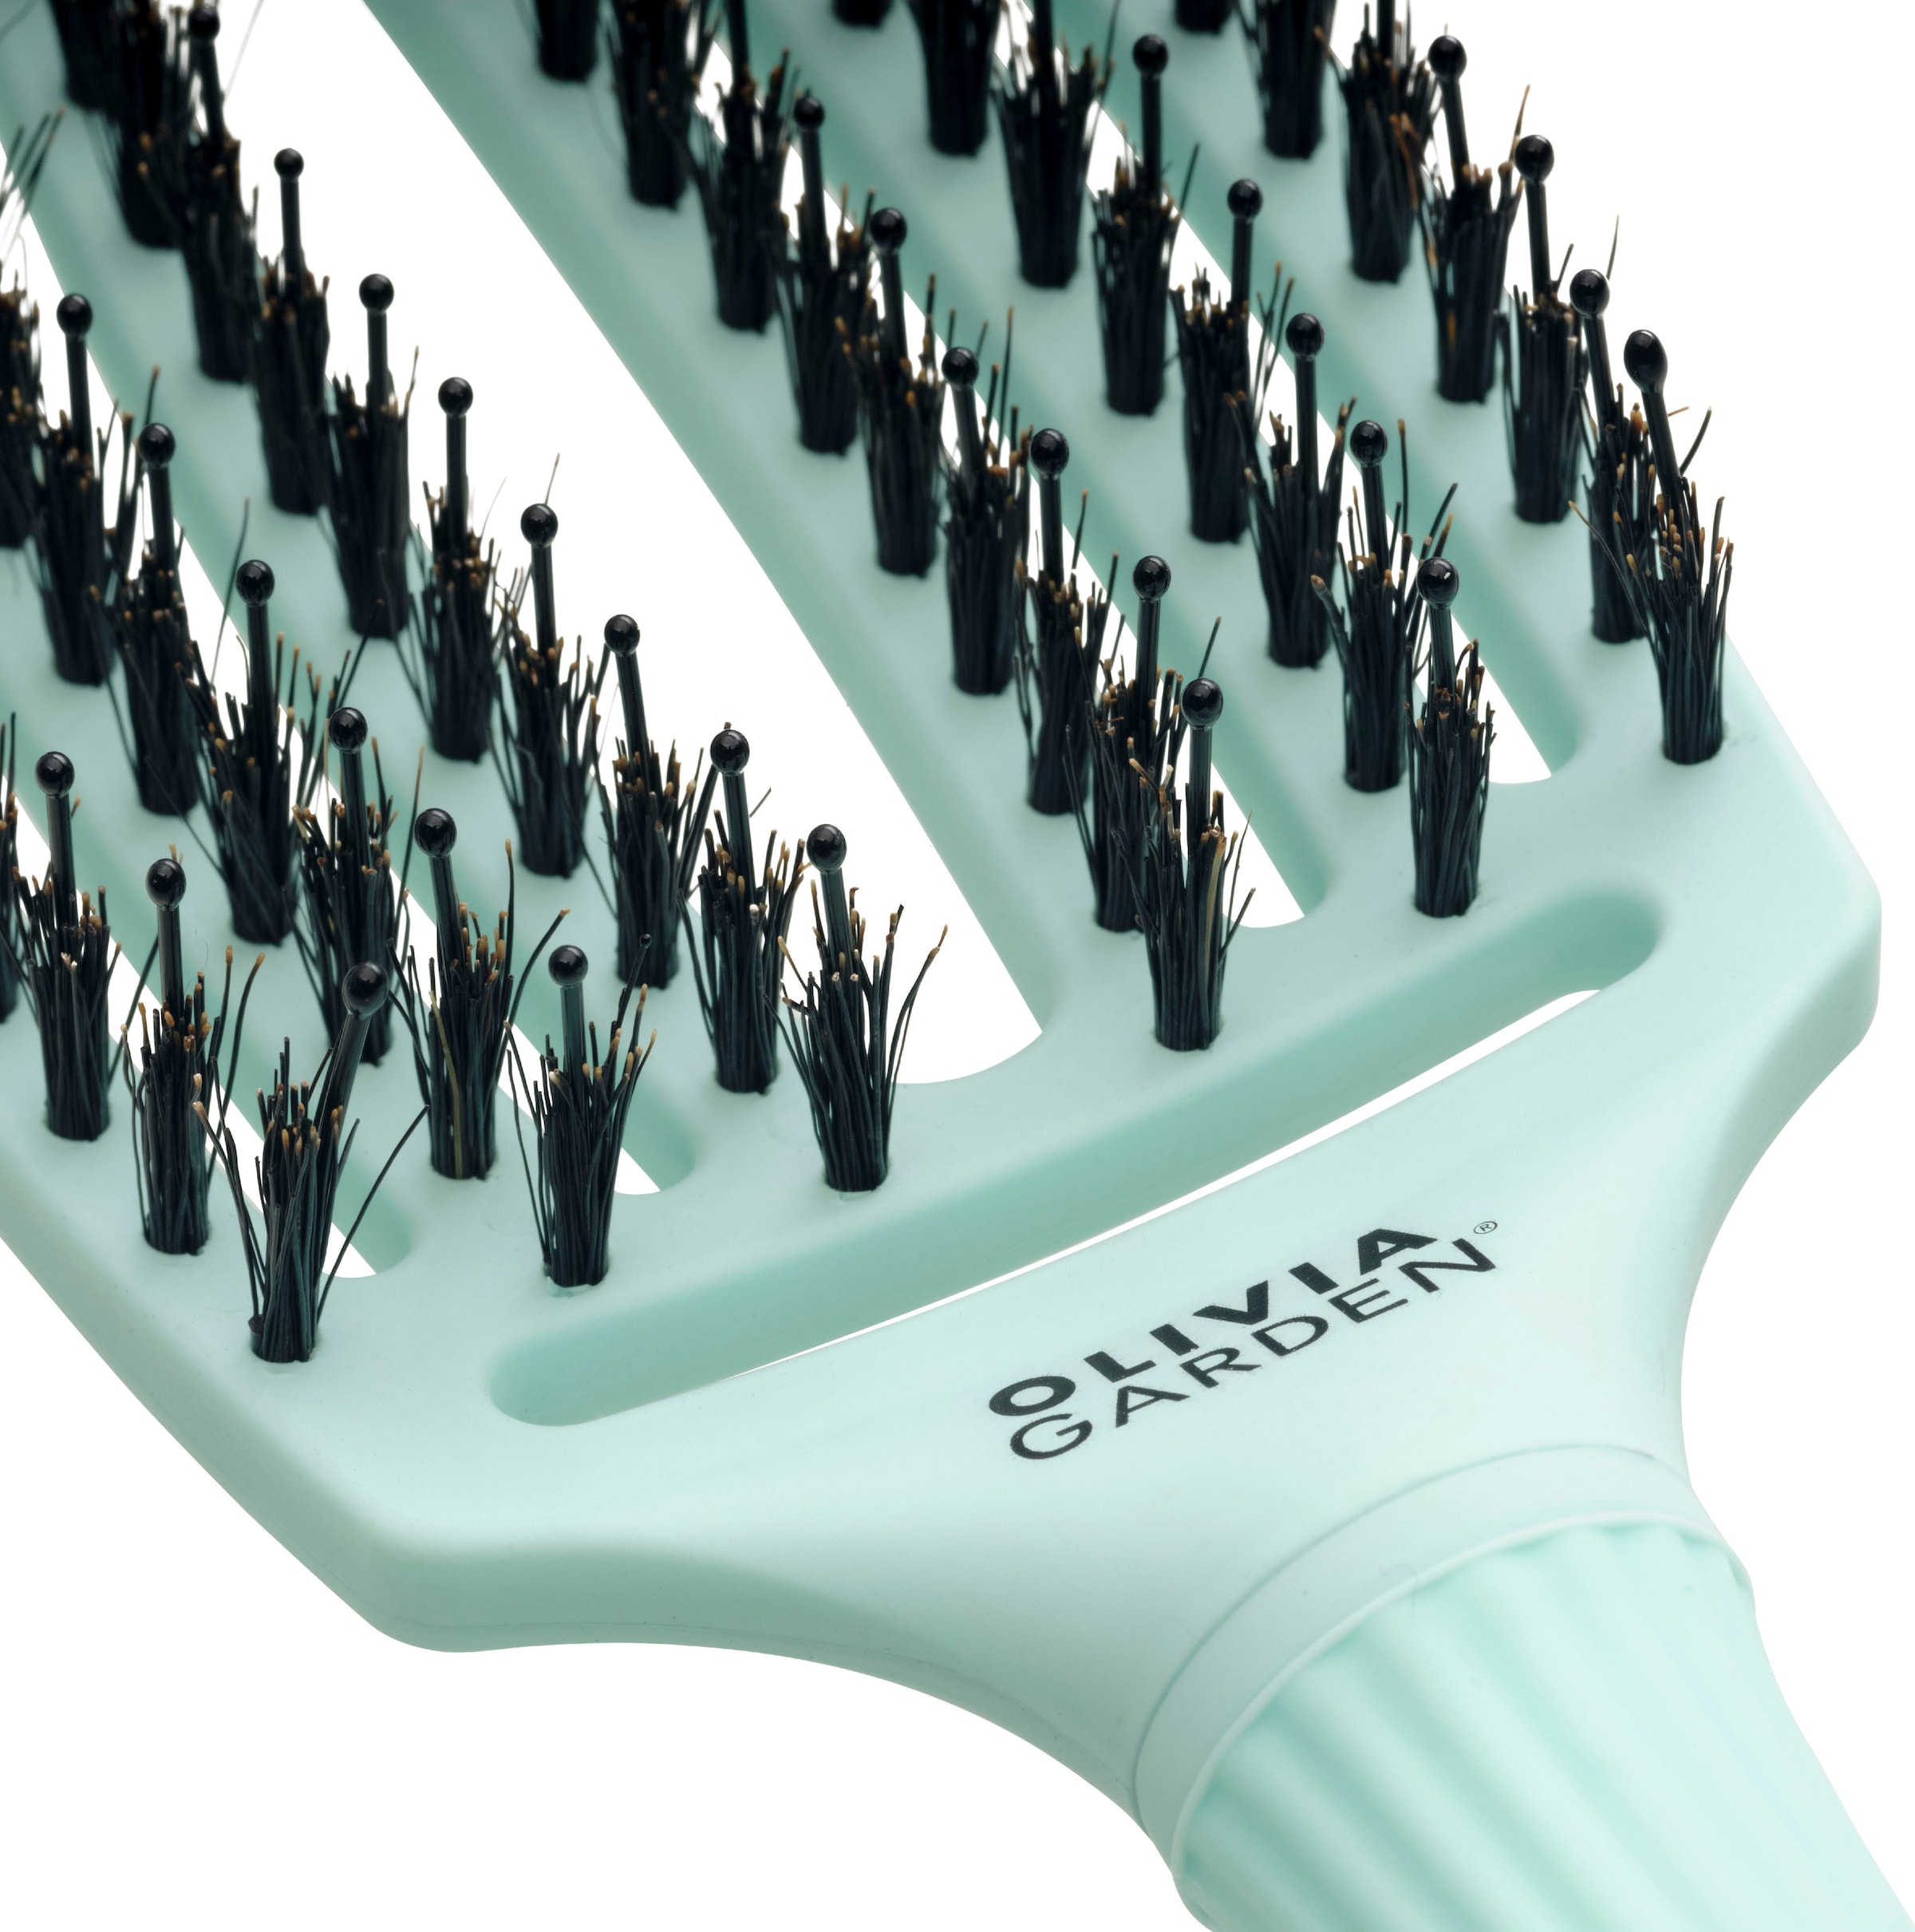 OLIVIA GARDEN Haarbürste »Fingerbrush Combo Medium« mit 3 Jahren XXL  Garantie